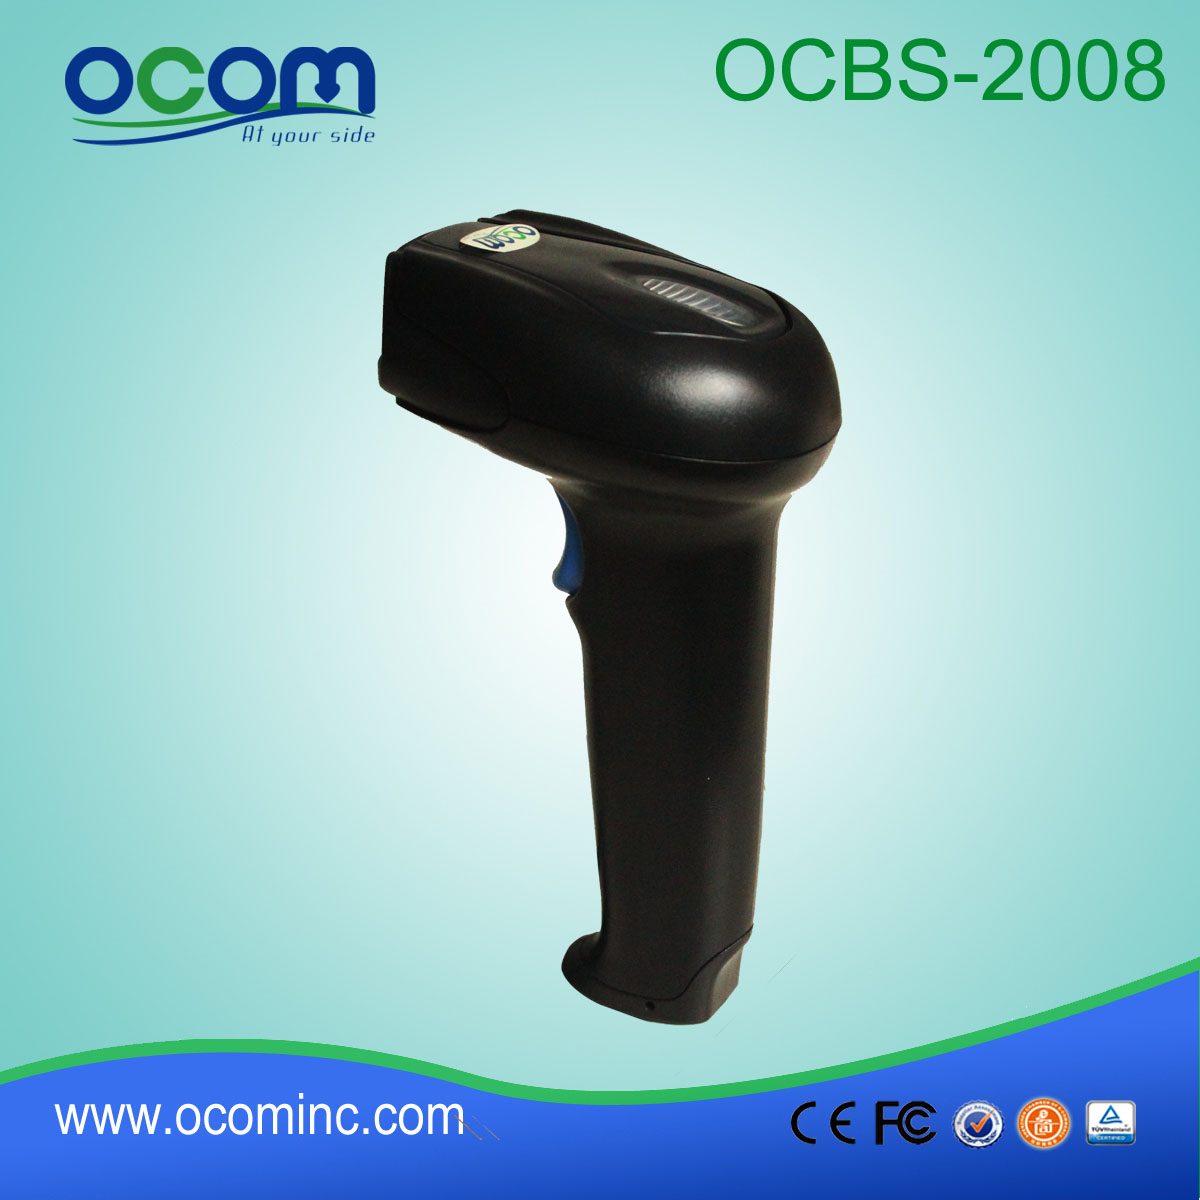 OCBs-2008 Σούπερ μάρκετ 2D QR Code Χειρός Barcode Scanner